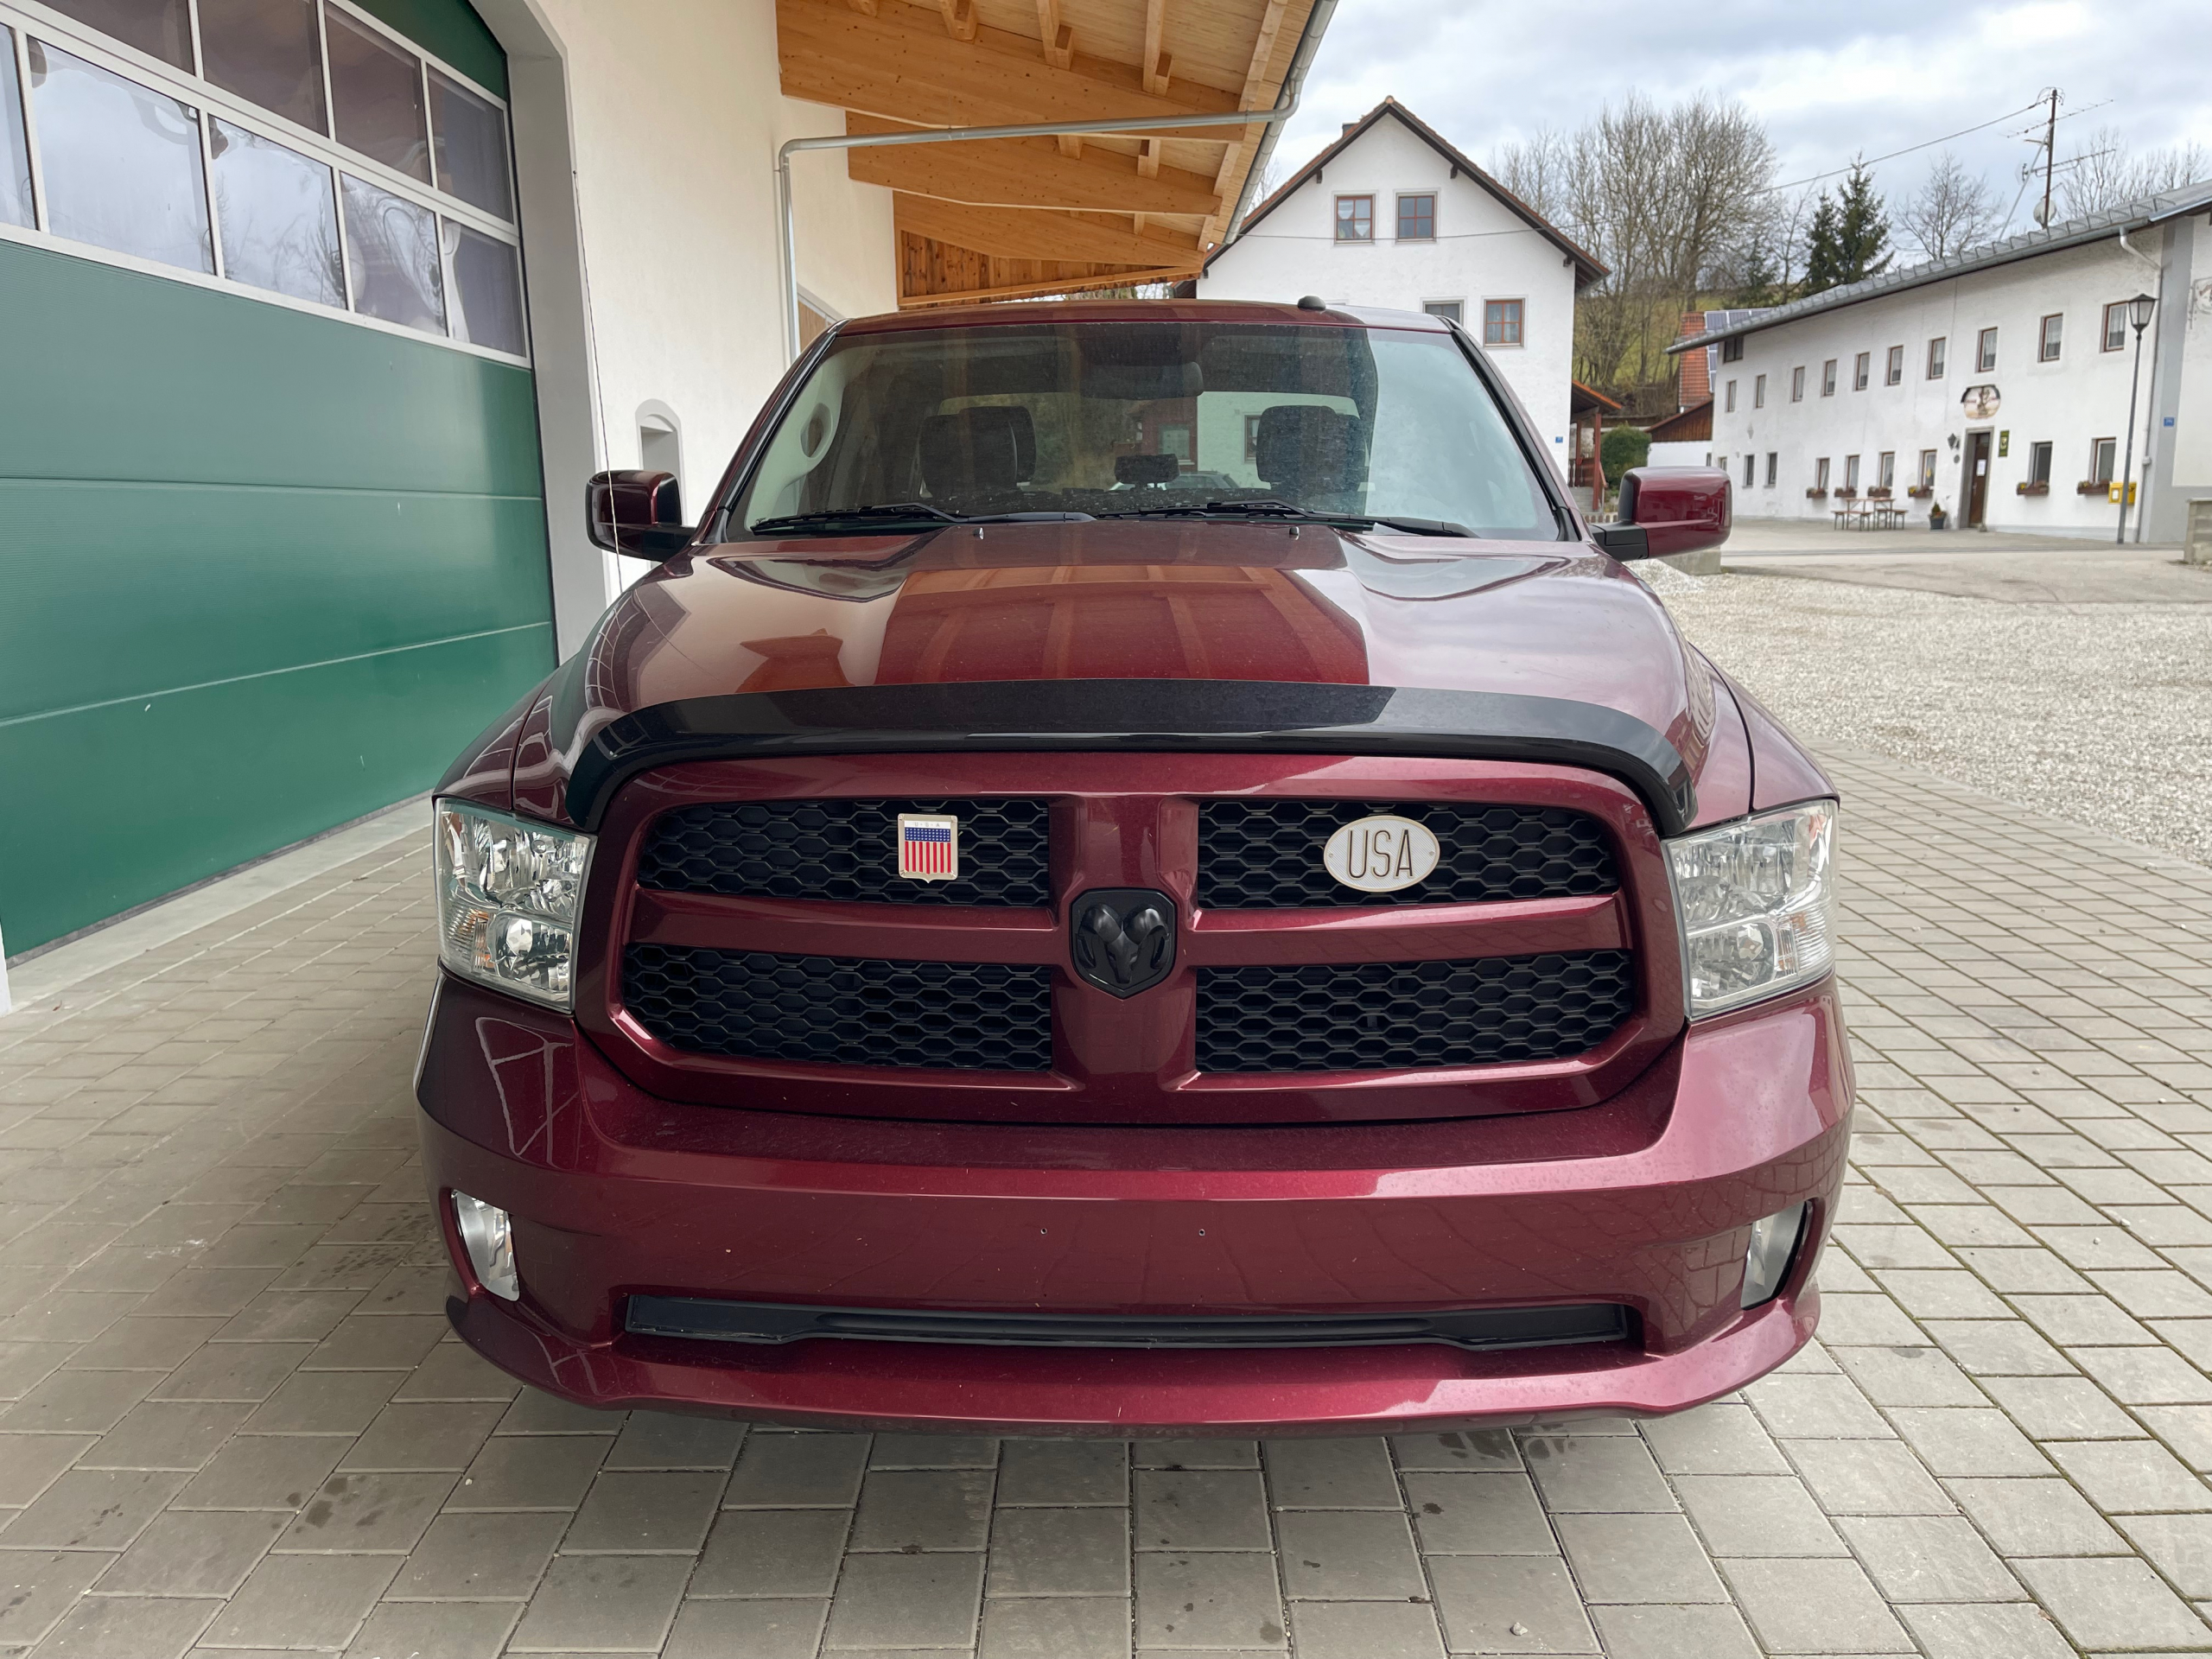 Dodge Ram europe for sale